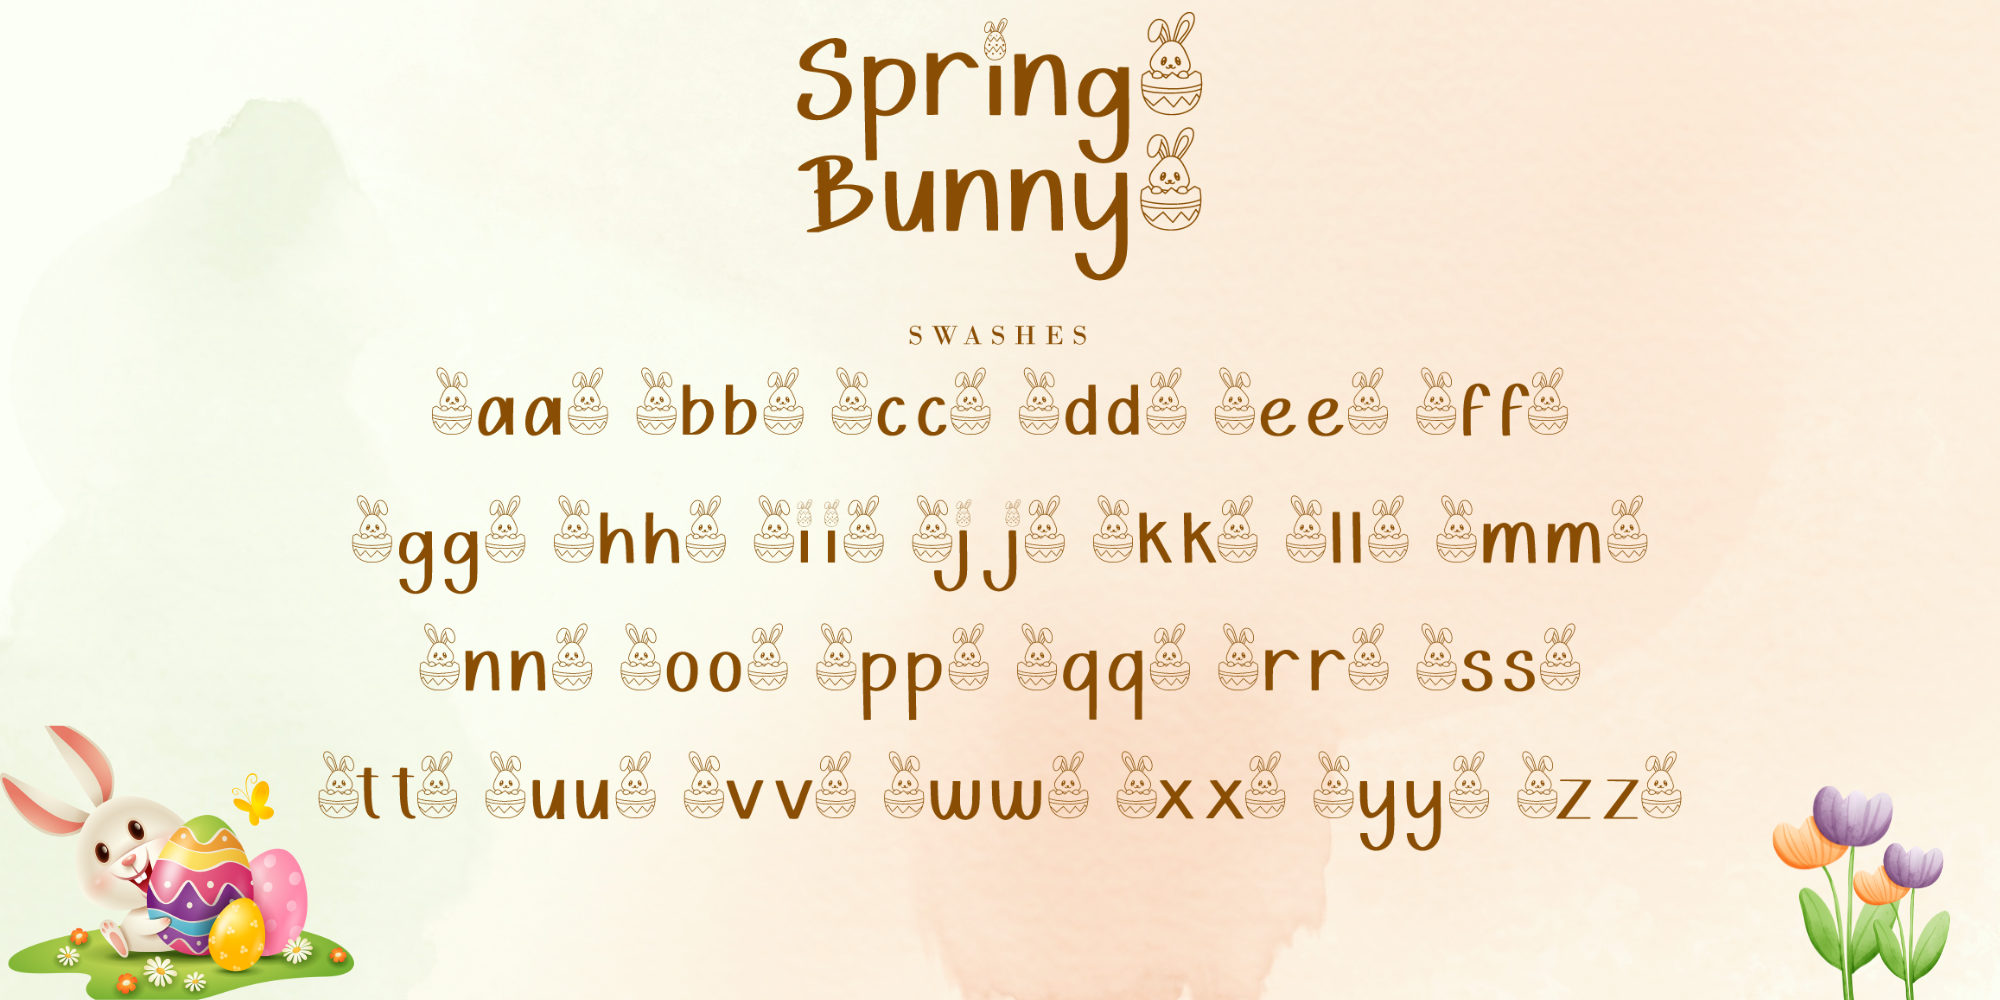 Spring Bunny